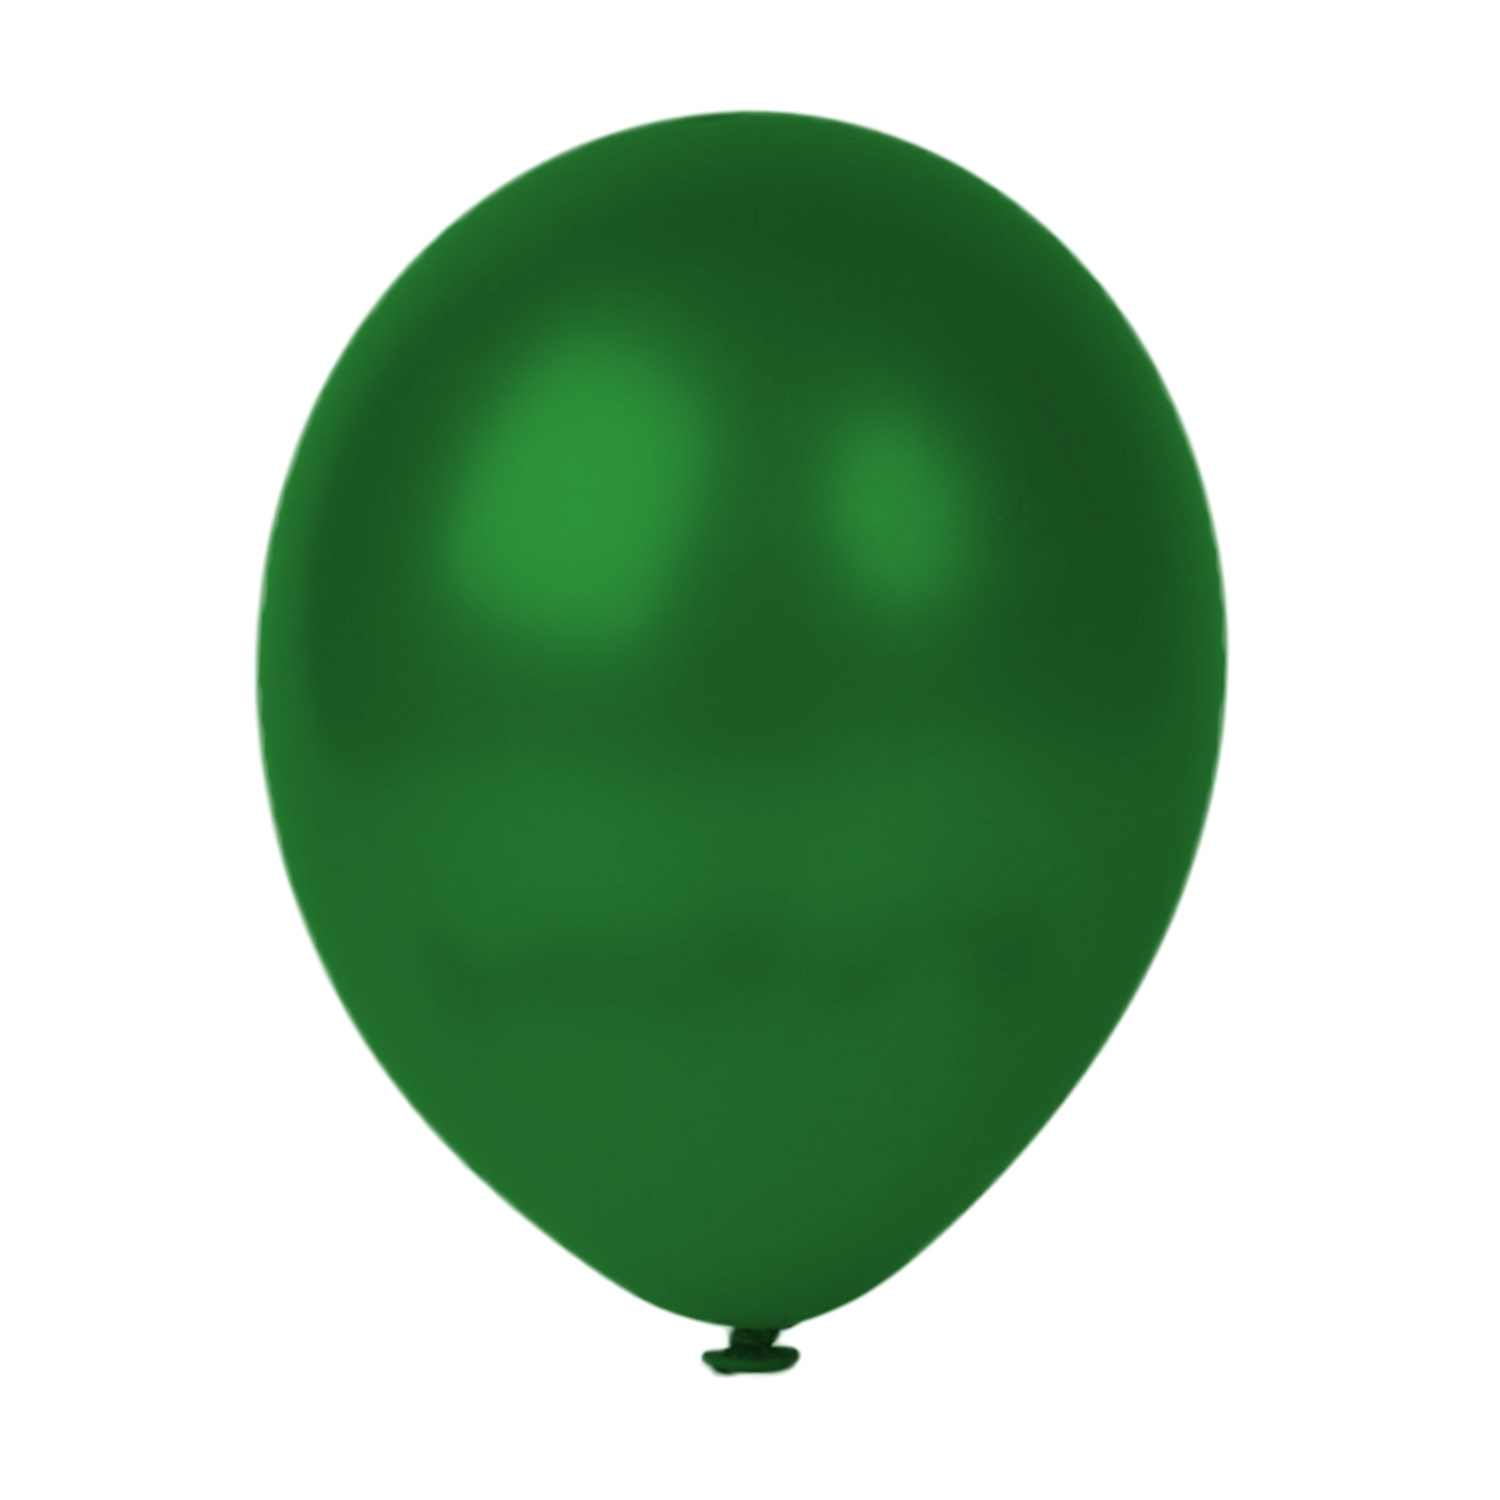 25er SET - Latex Luftballon - 12inch - Grün - Metallic (glänzend)